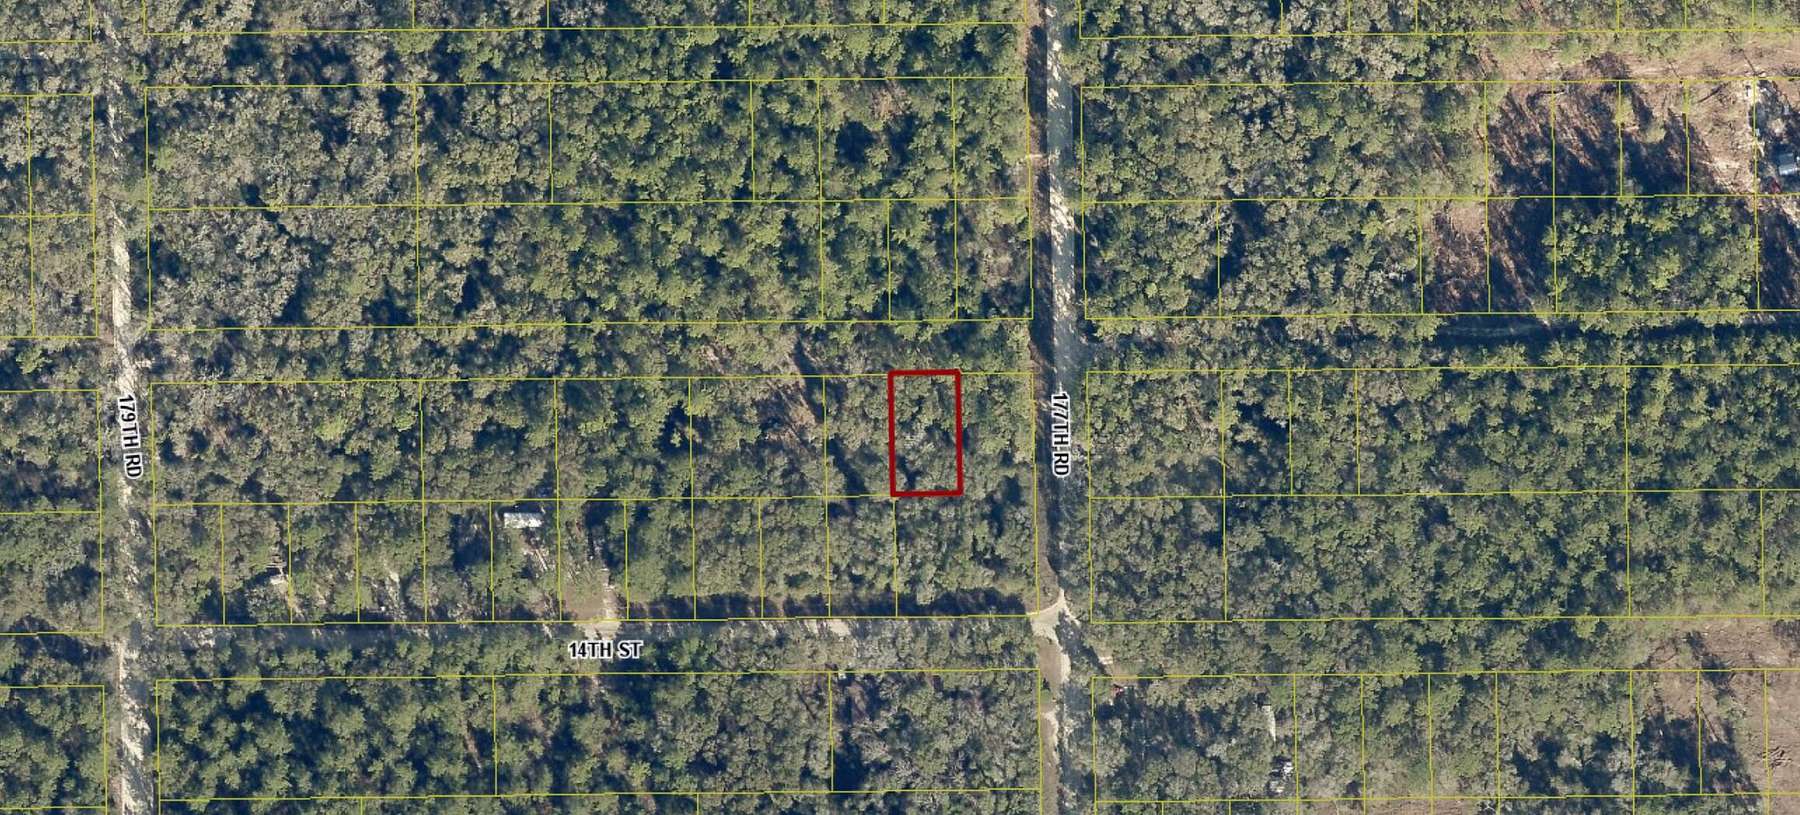 0.23 Acres of Land for Sale in Live Oak, Florida